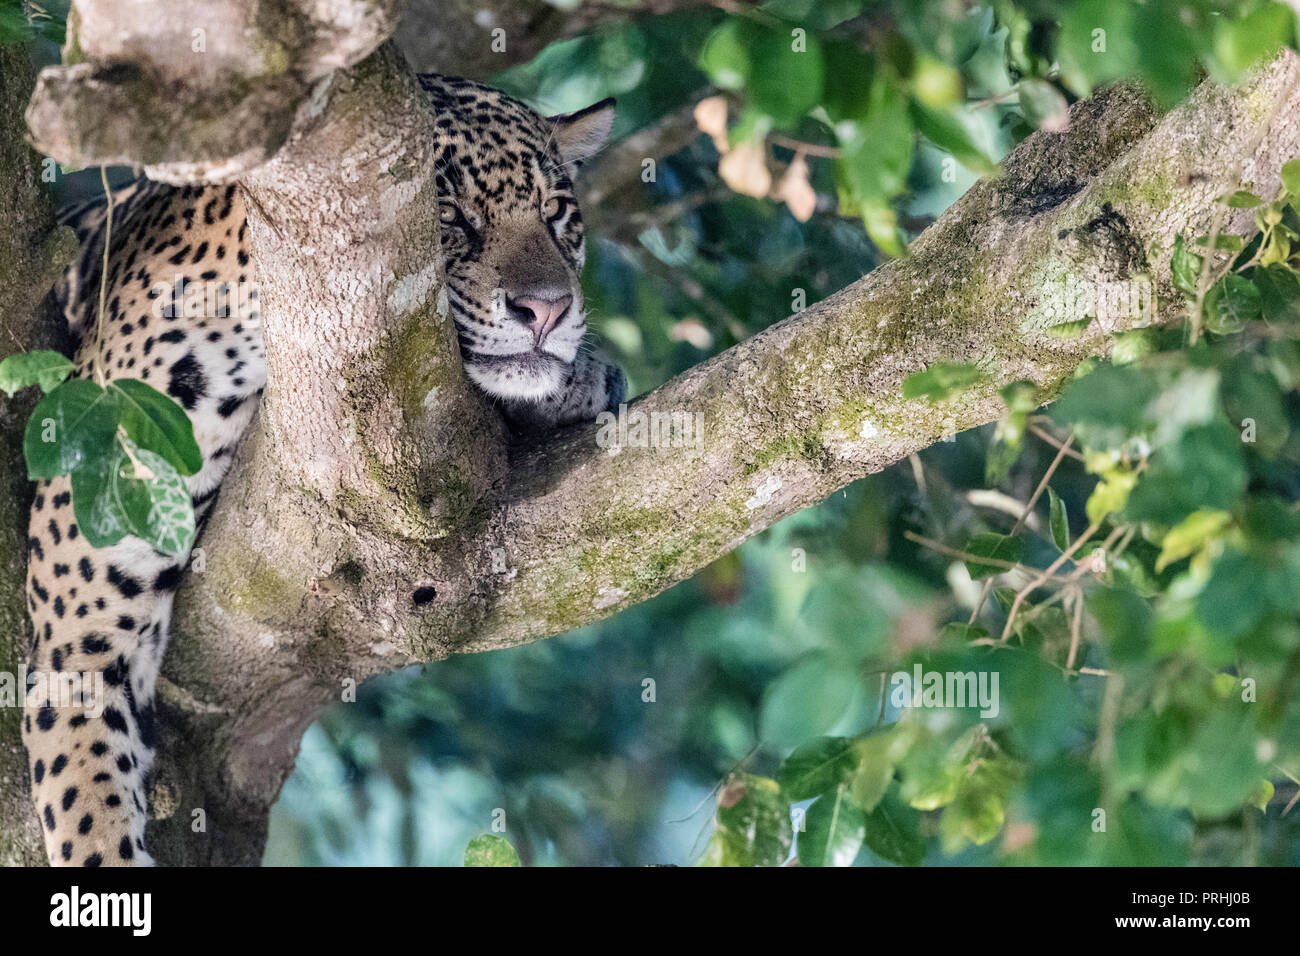 Jaguar (Panthera onca) in tree on the Rio Tres Irmao, Mato Grosso, Brazil. Stock Photo